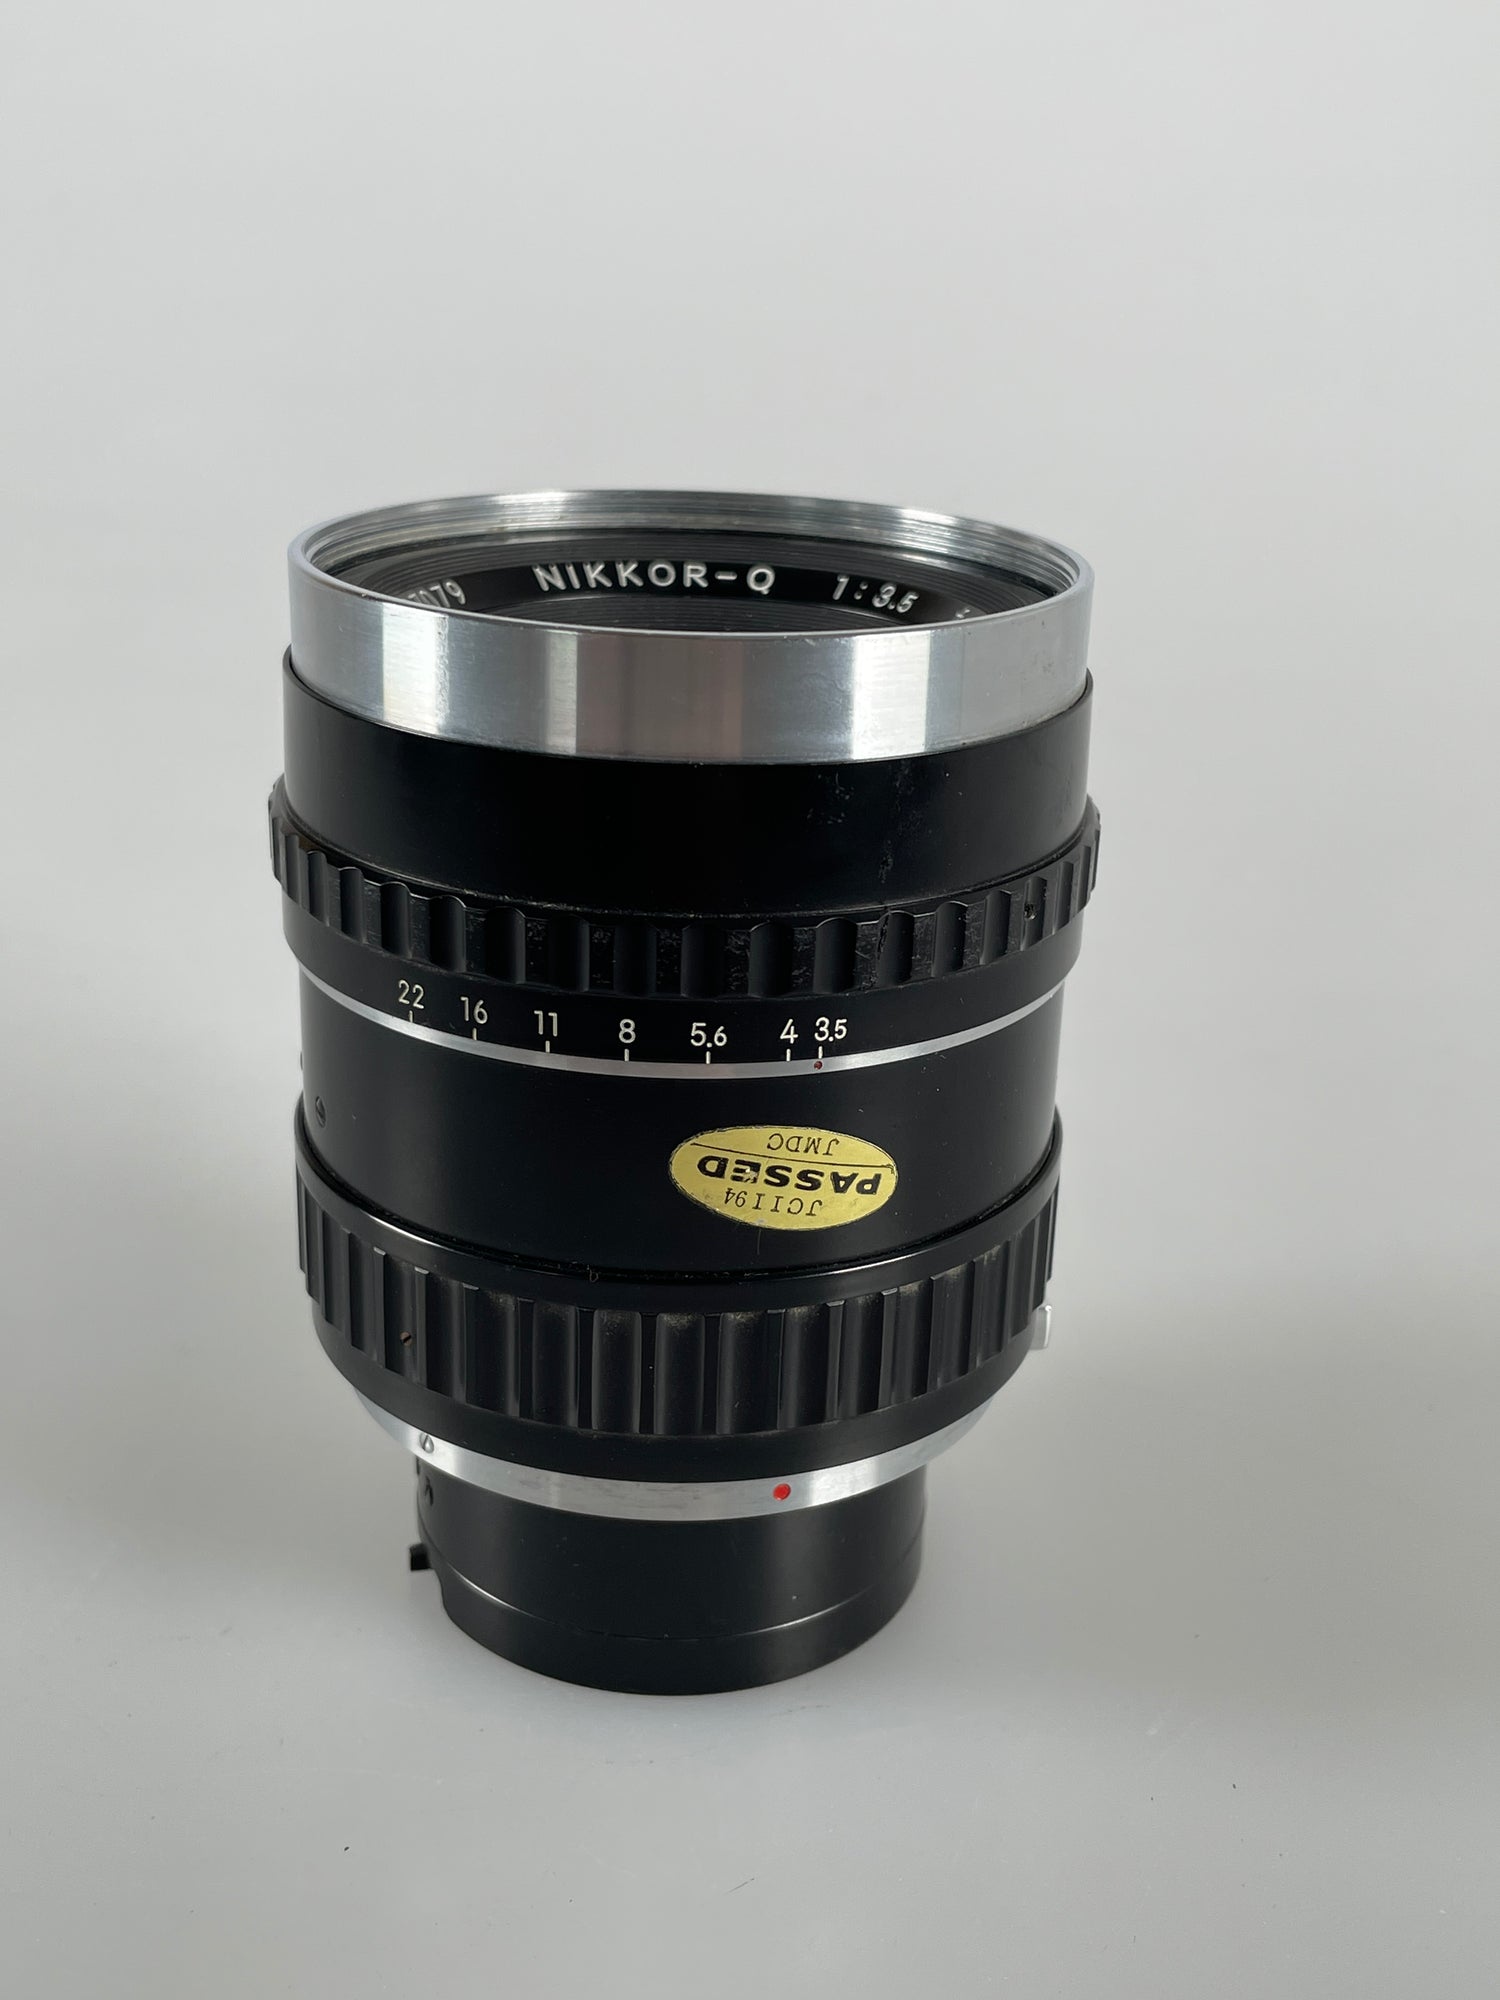 Medium Format Lenses